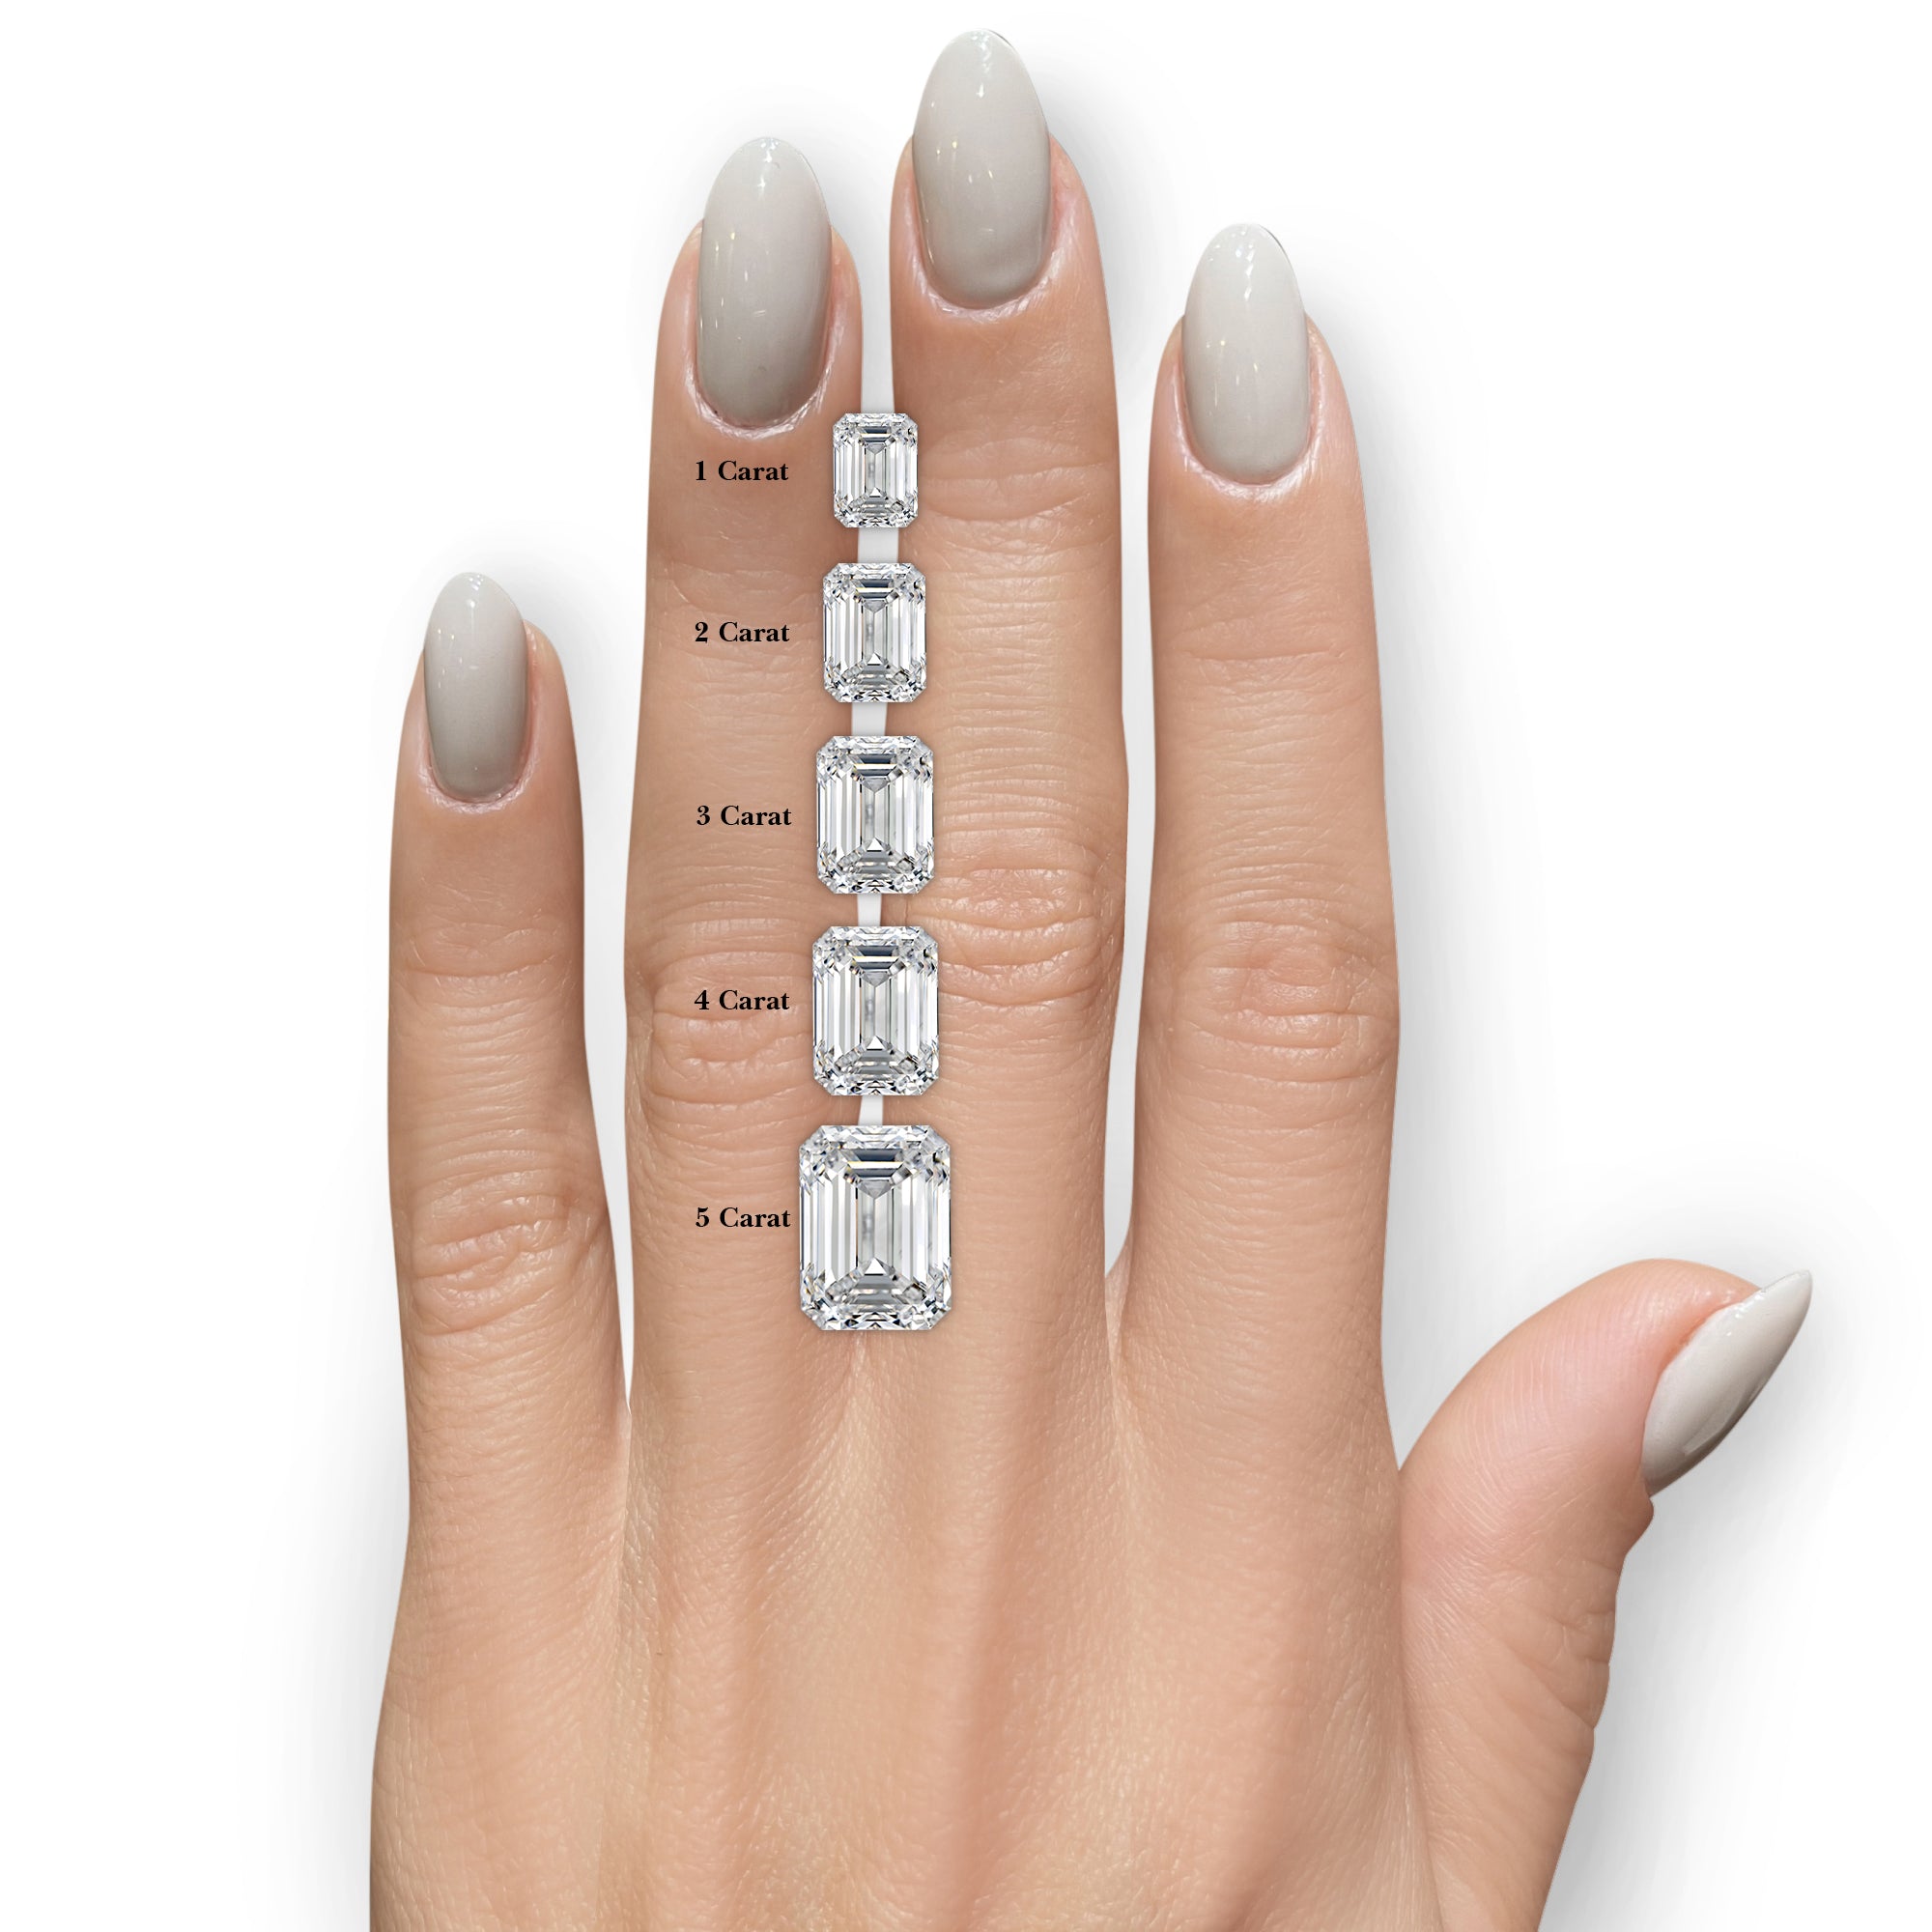 Zoey Diamond Engagement Ring -Platinum